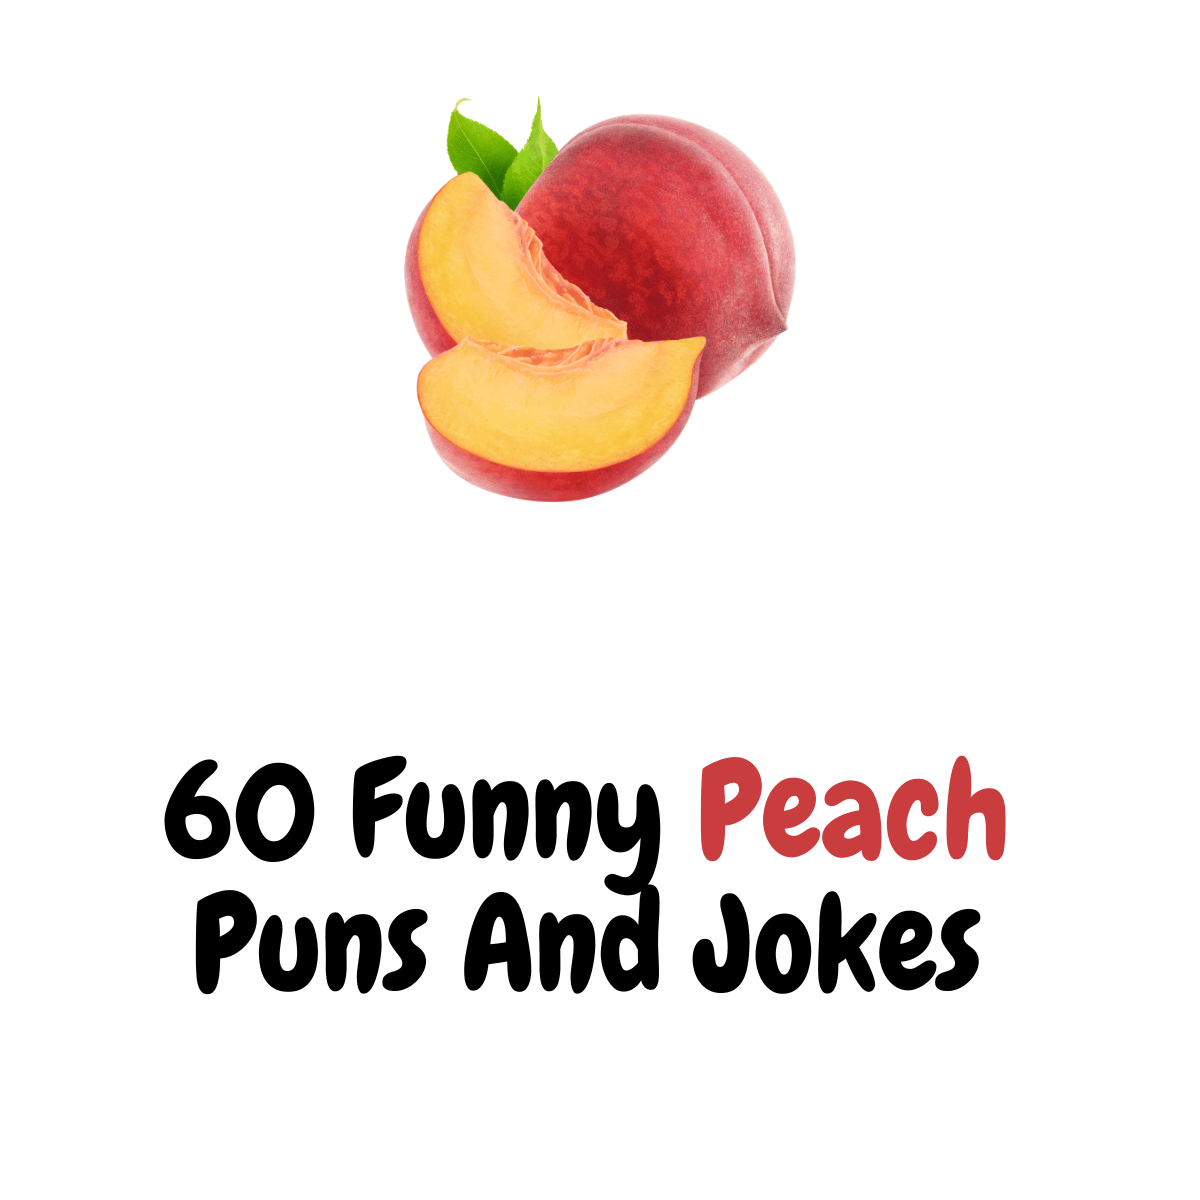 Funny Peach Puns And Jokes